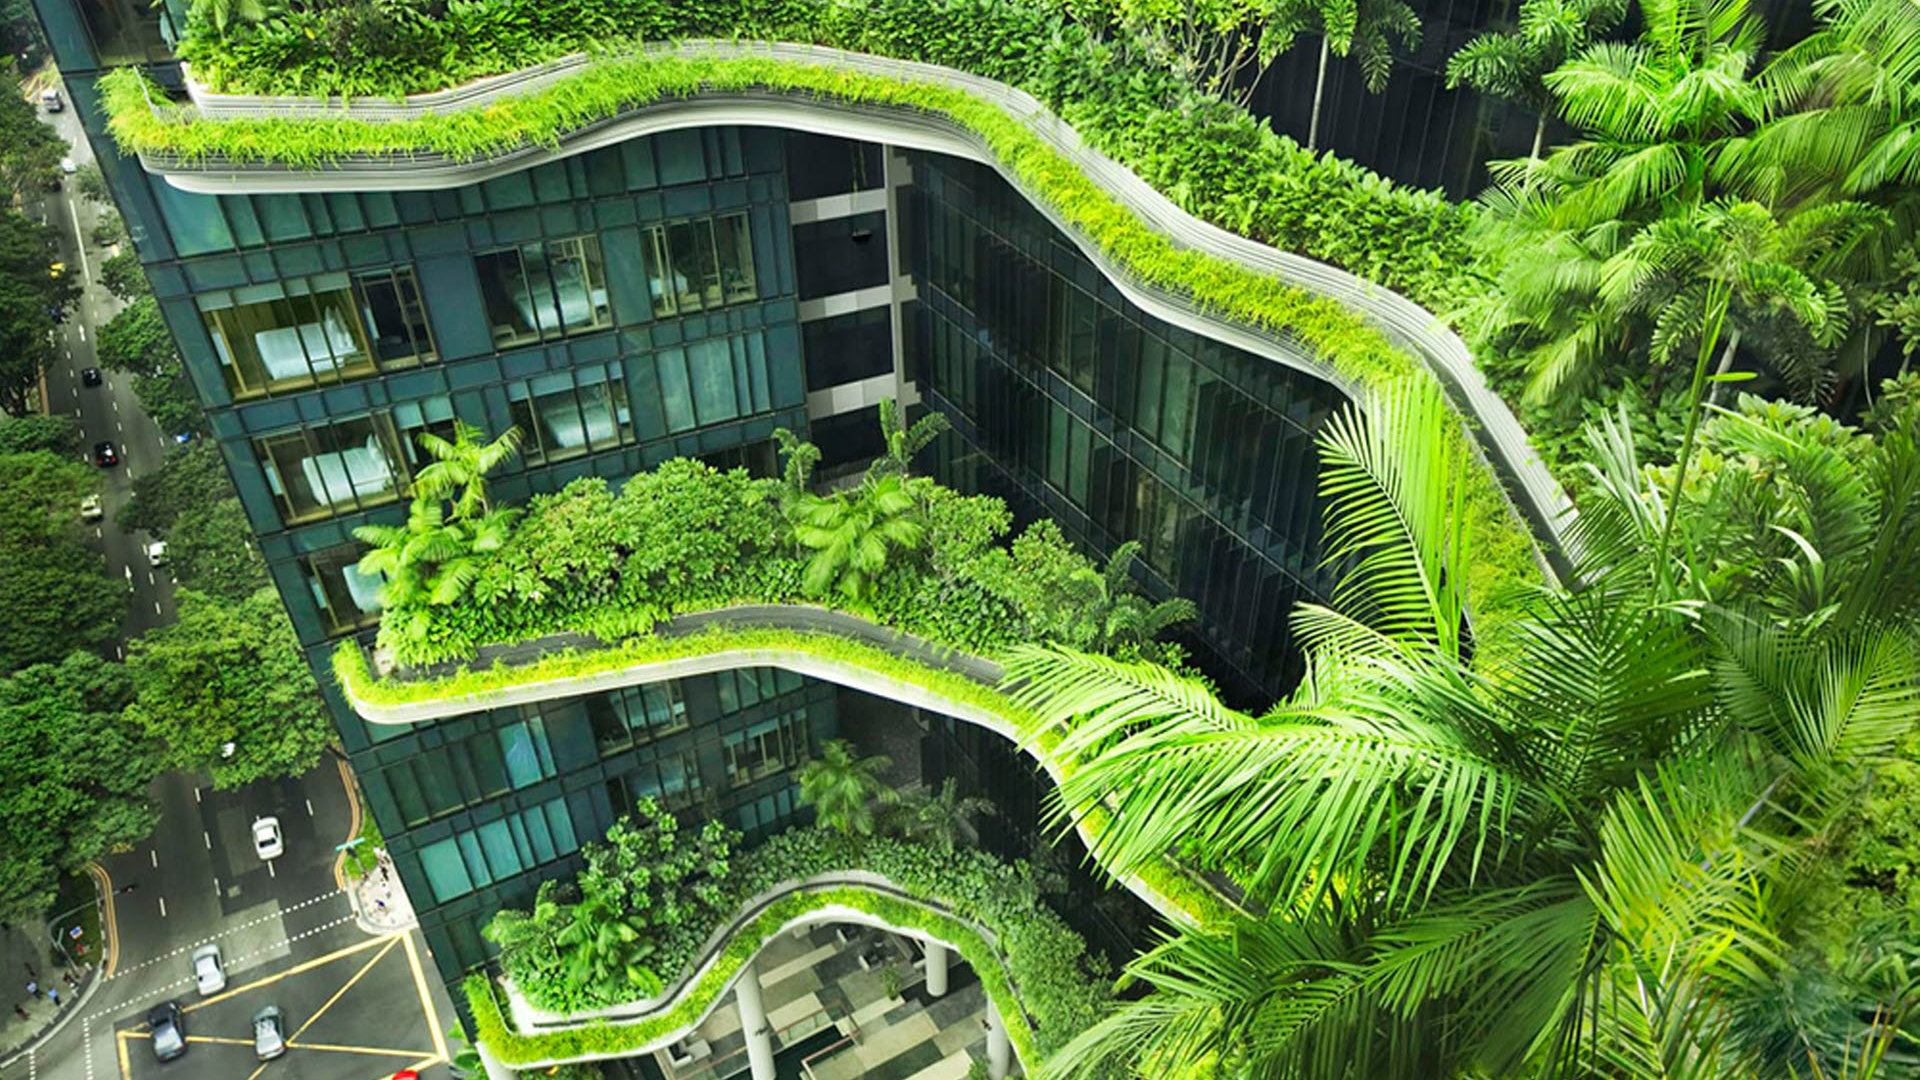 Plants growing on buildings